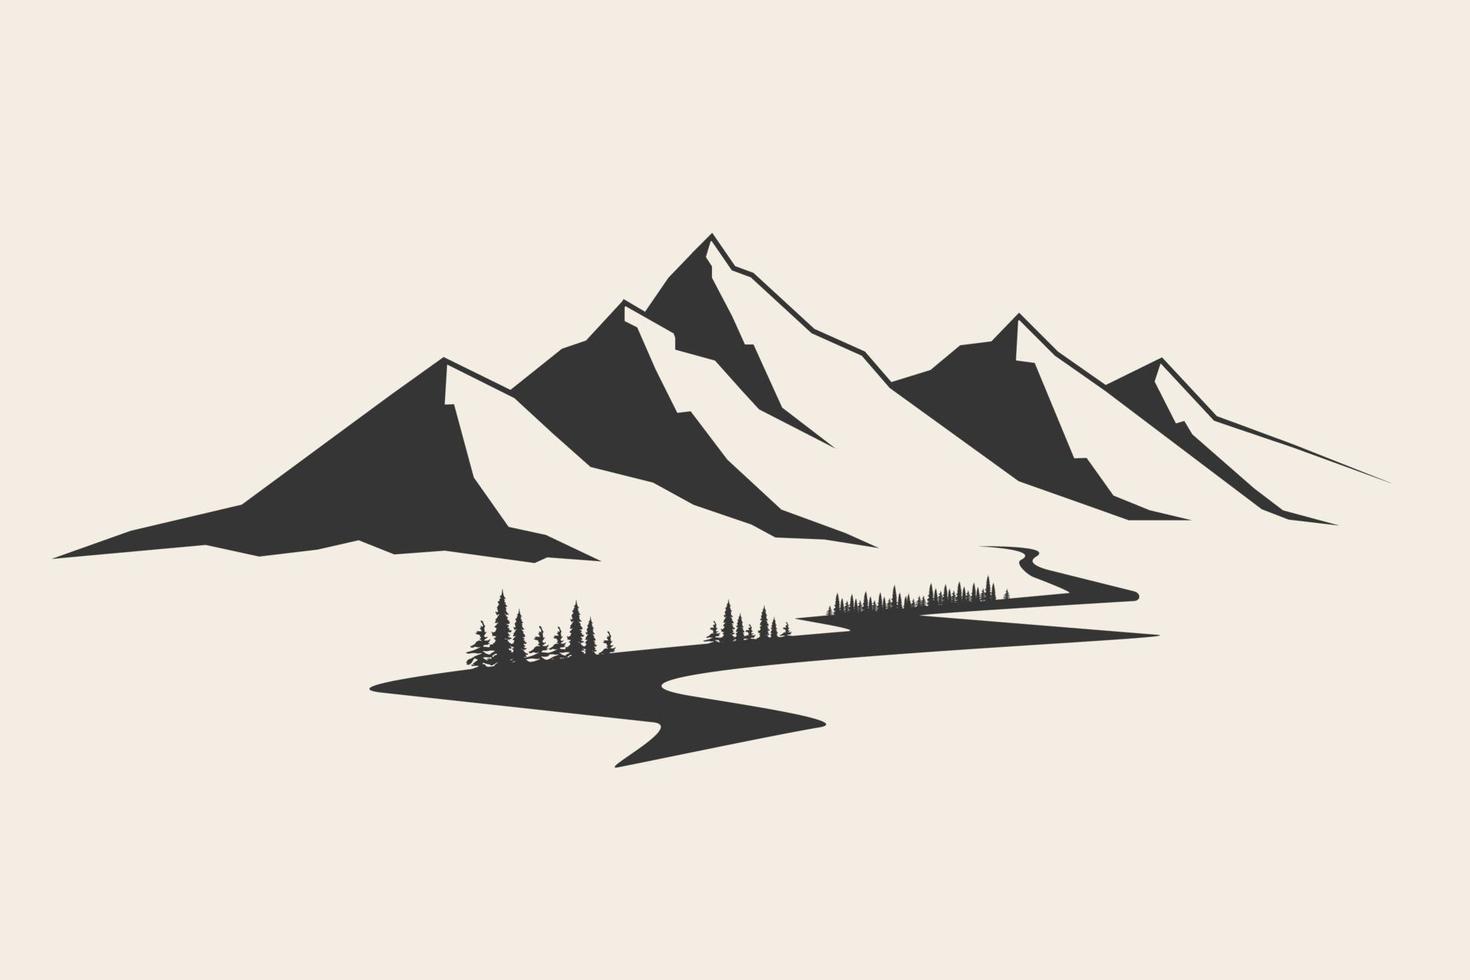 Mountains vector.Mountain range silhouette isolated vector illustration. Mountains silhouette